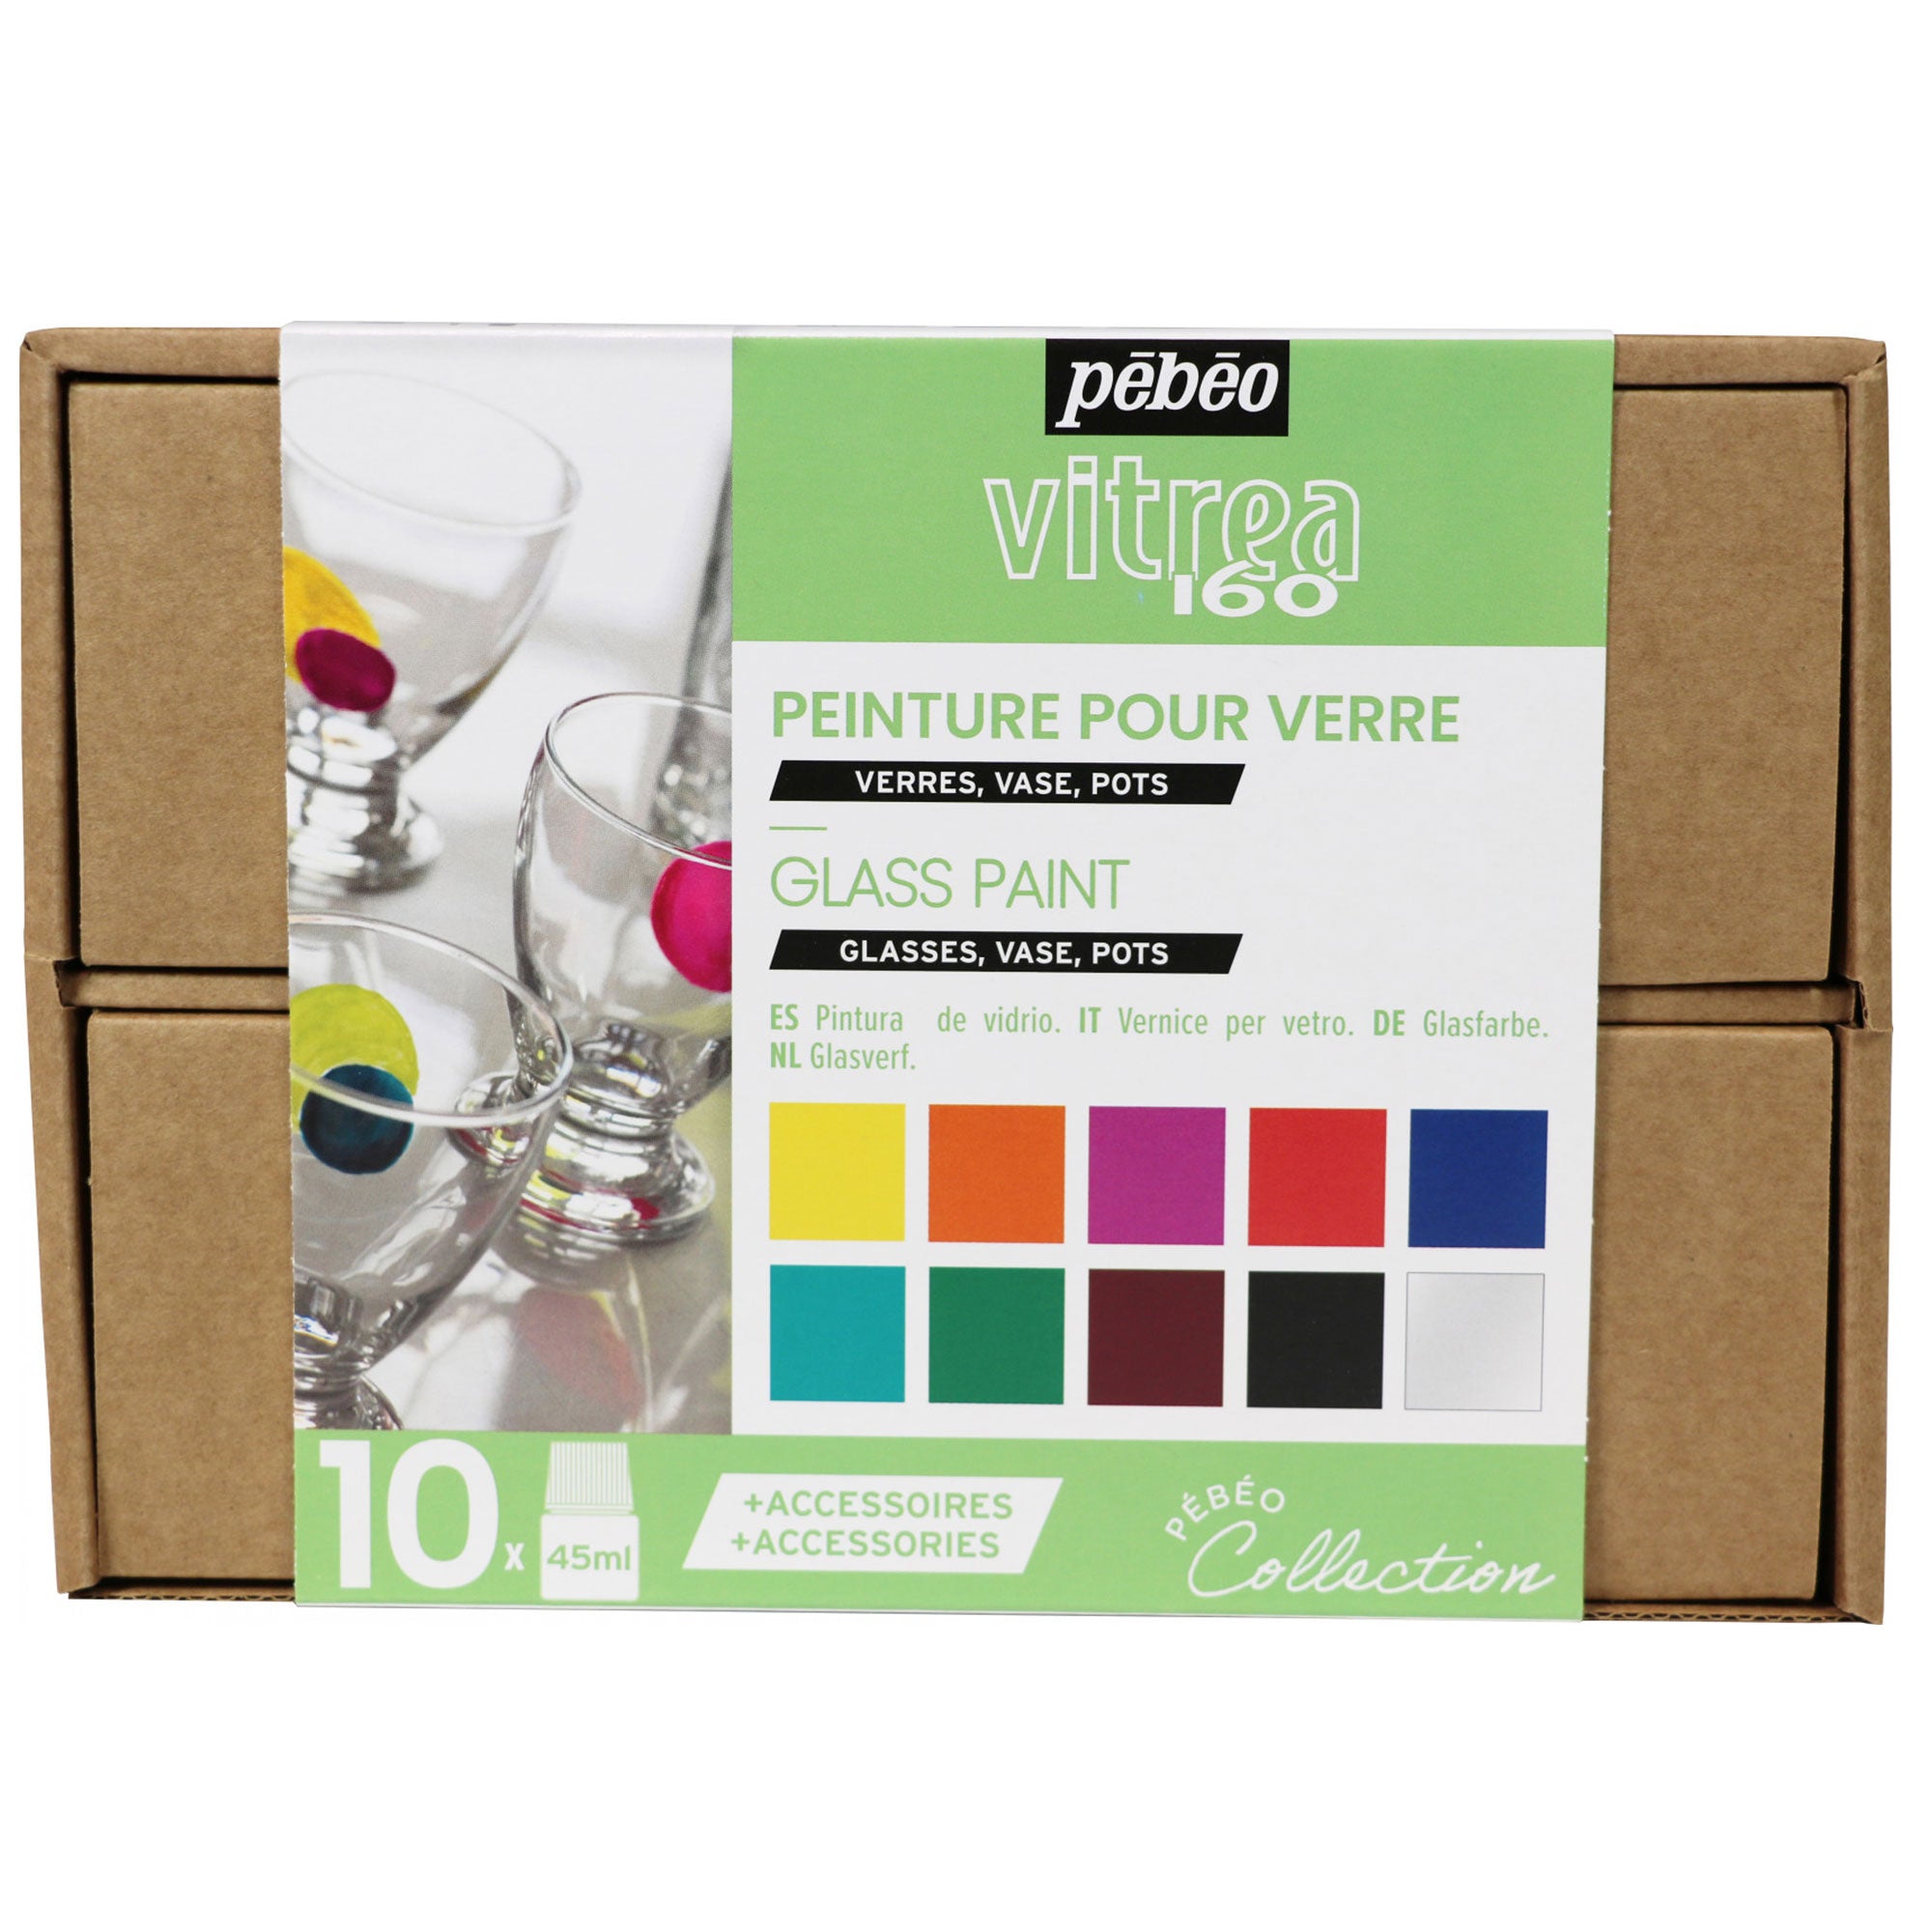 Pebeo Vitrea 160 Glass Painting Set Box